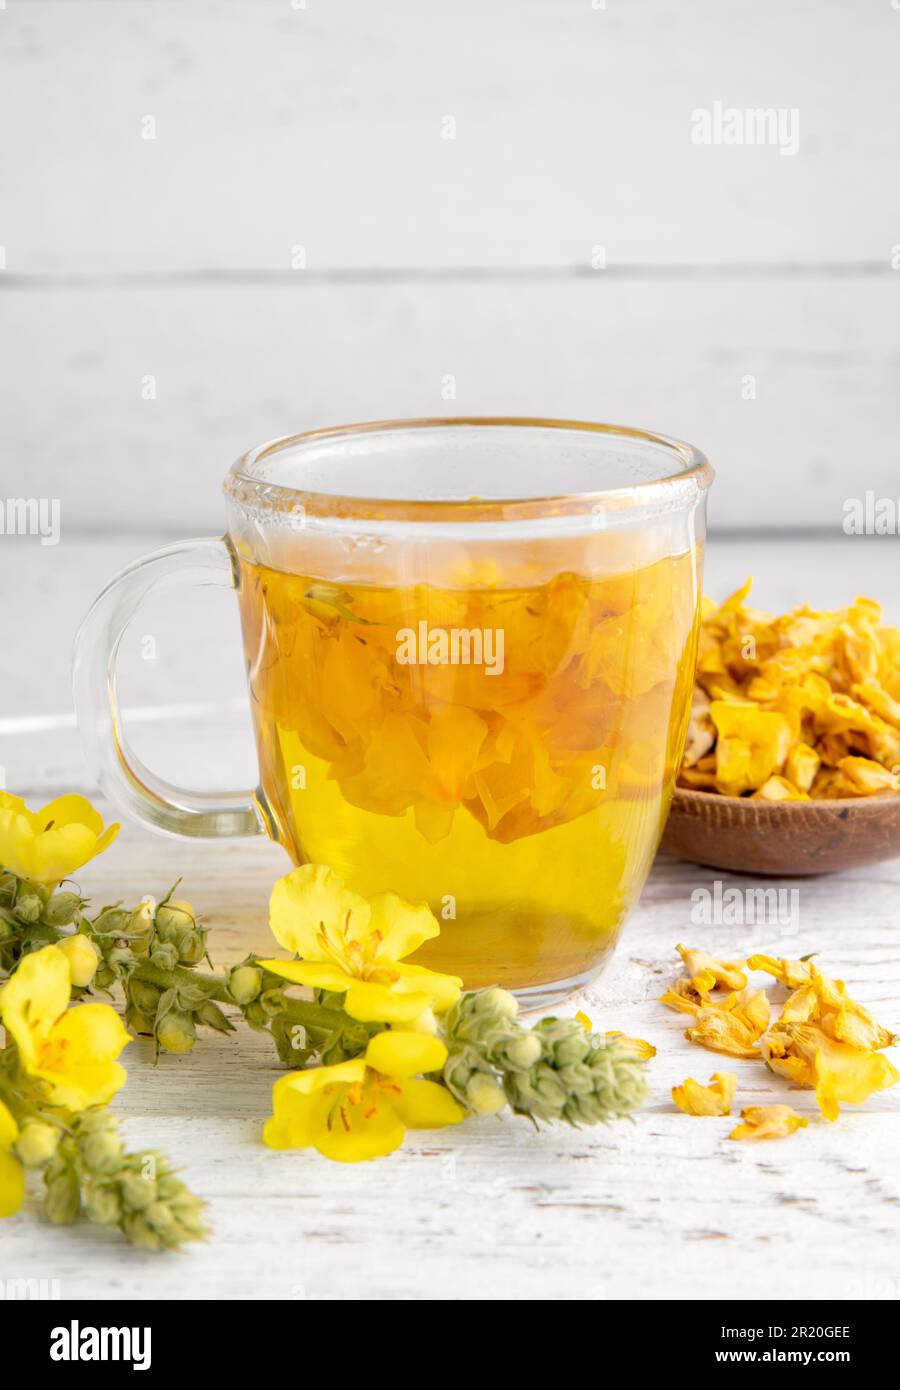 Bevanda a base di tè medicinale a base di erbe fatta di Verbascum thapsus, la grande mulleina, più grande mulleina o comune mulleina. Petali di fiori secchi gialli. Bicchiere di vetro. Foto Stock